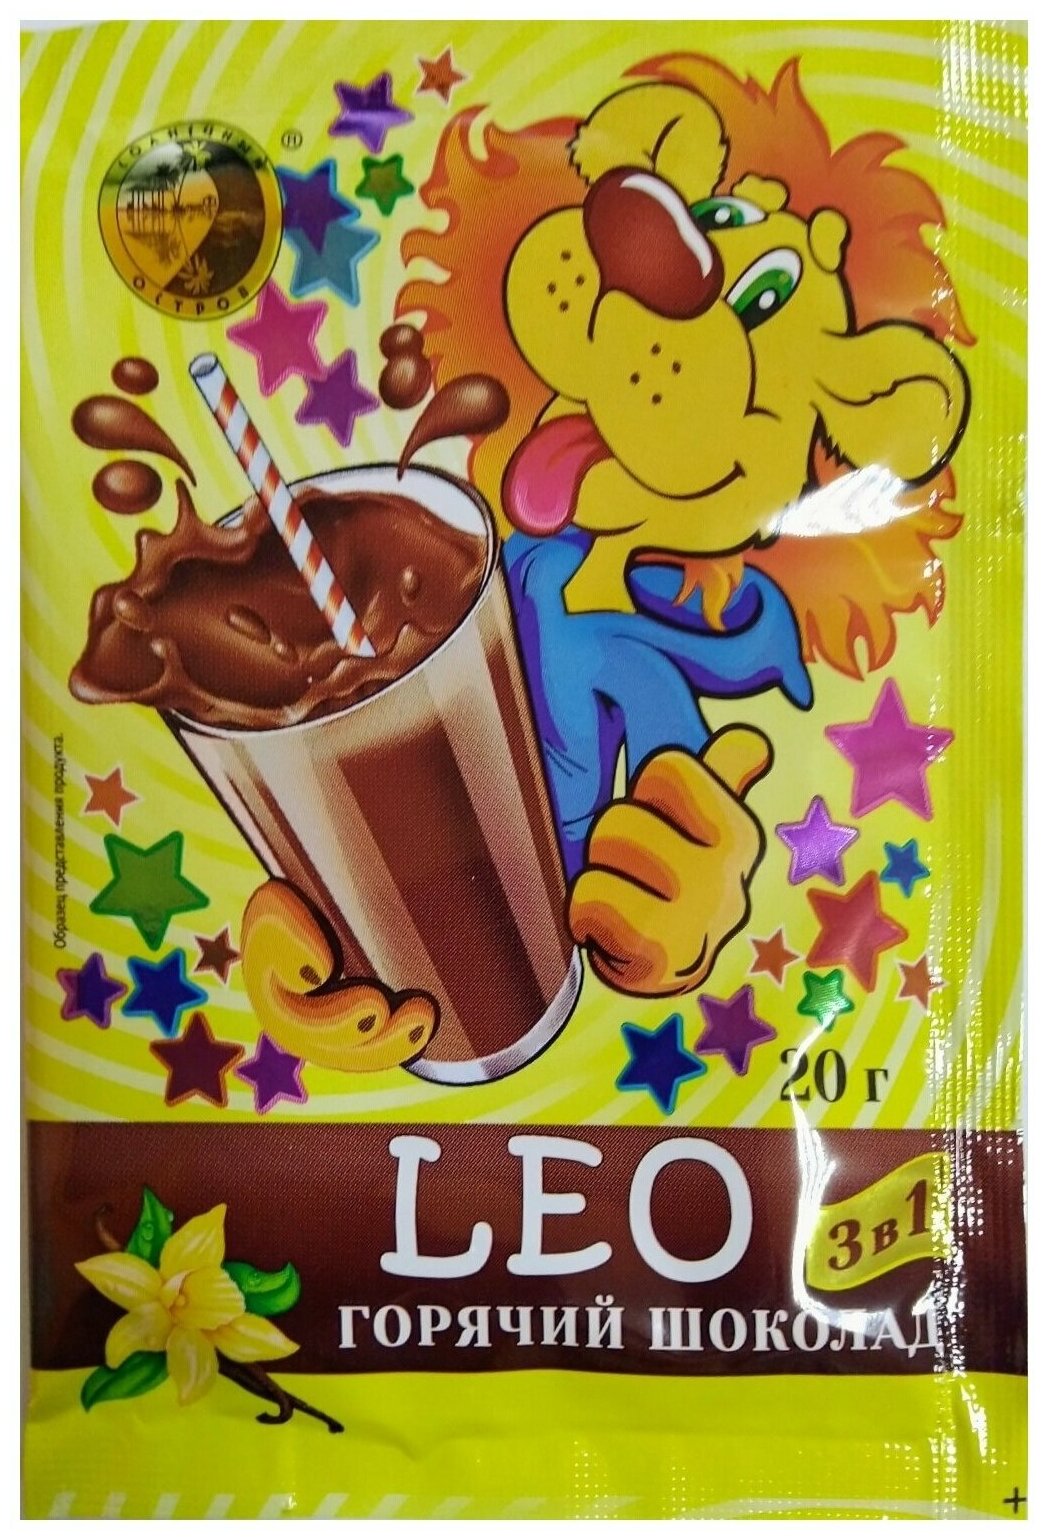 Горячий шоколад LEO 500 гр